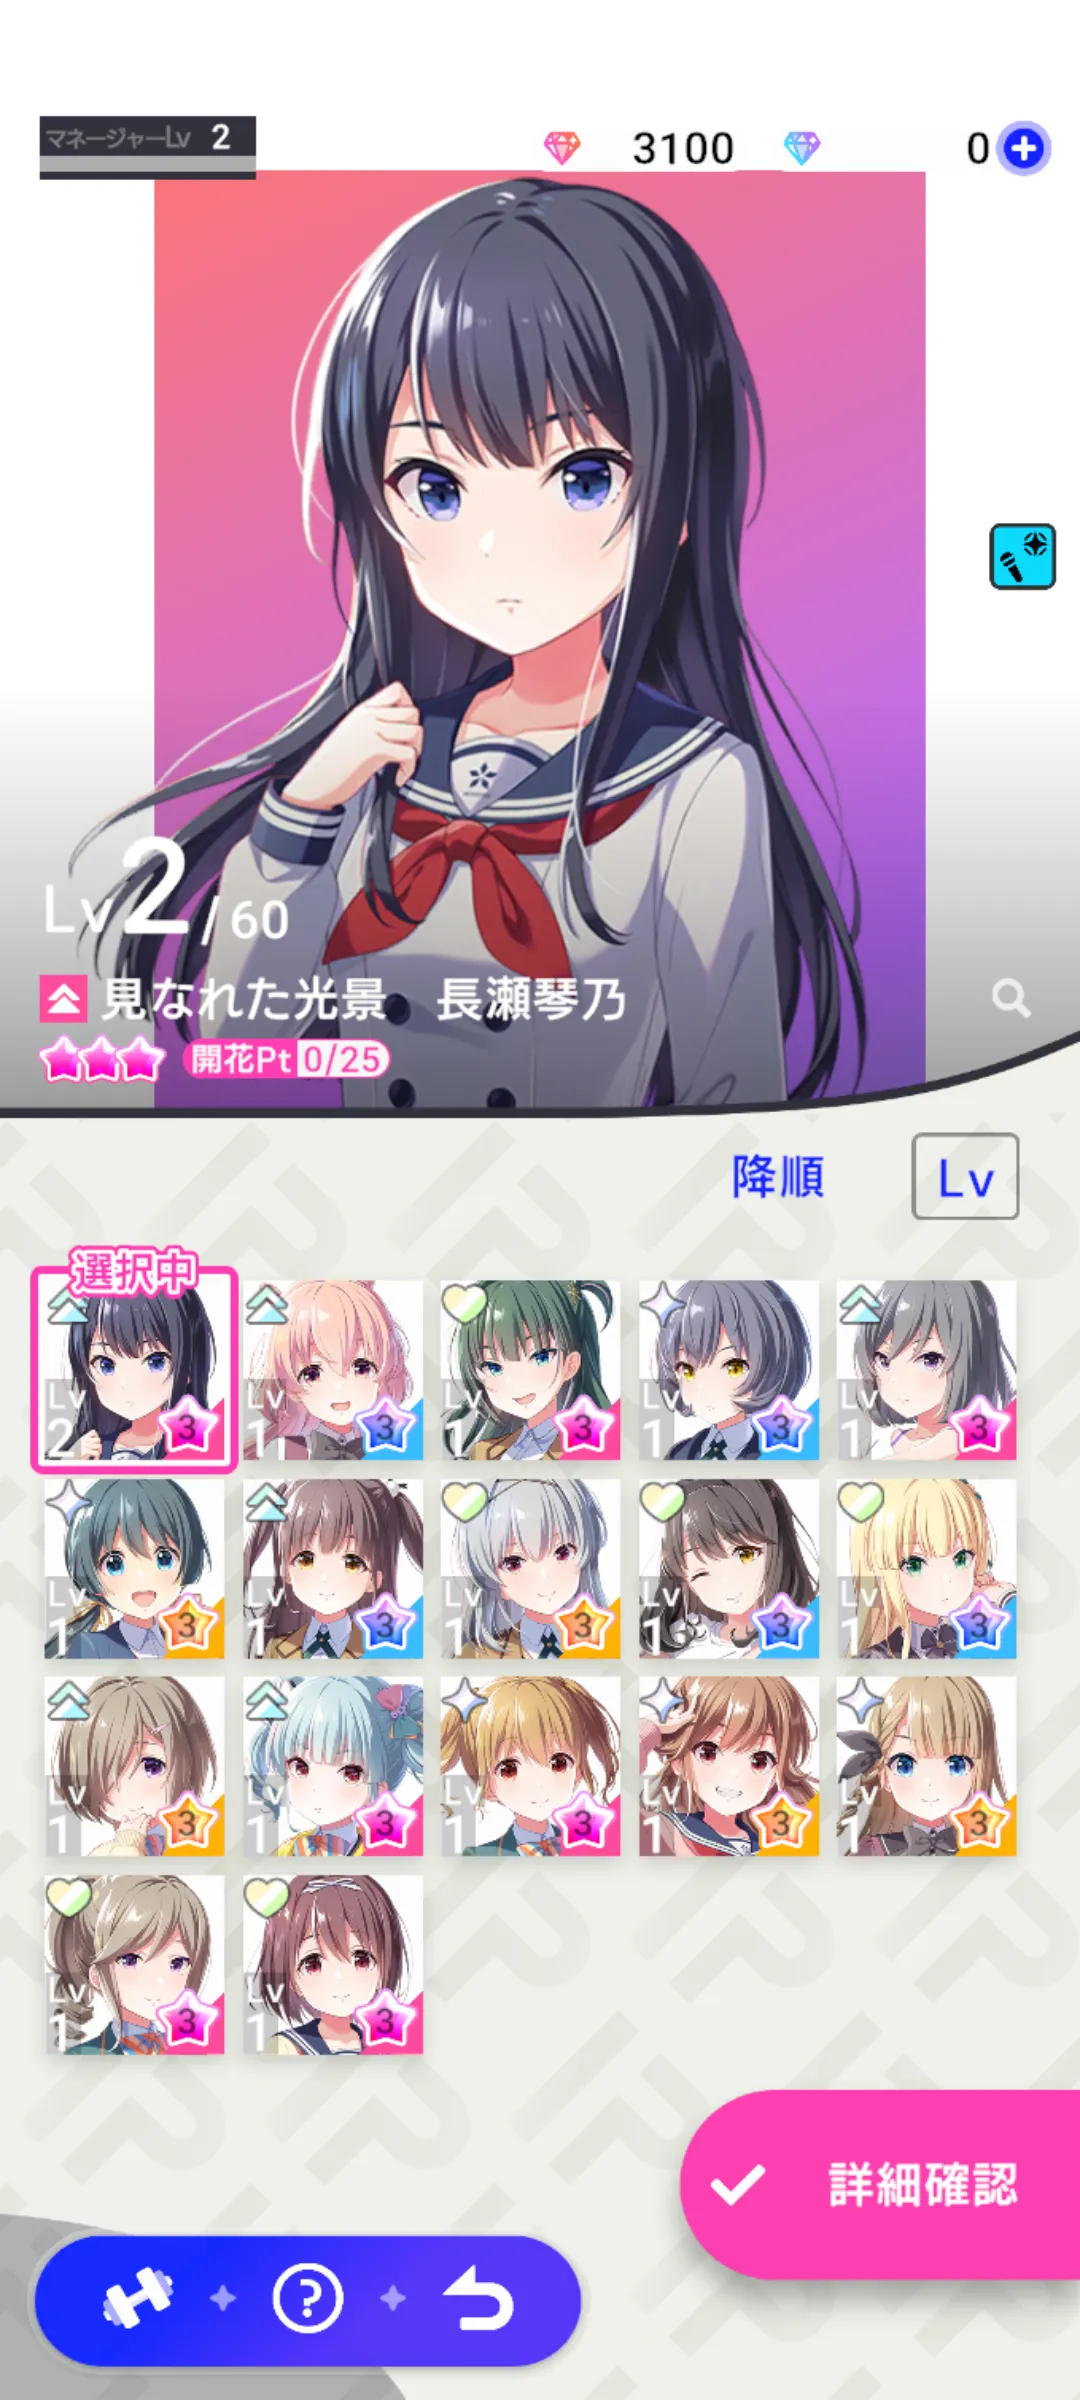 Idol selection screen